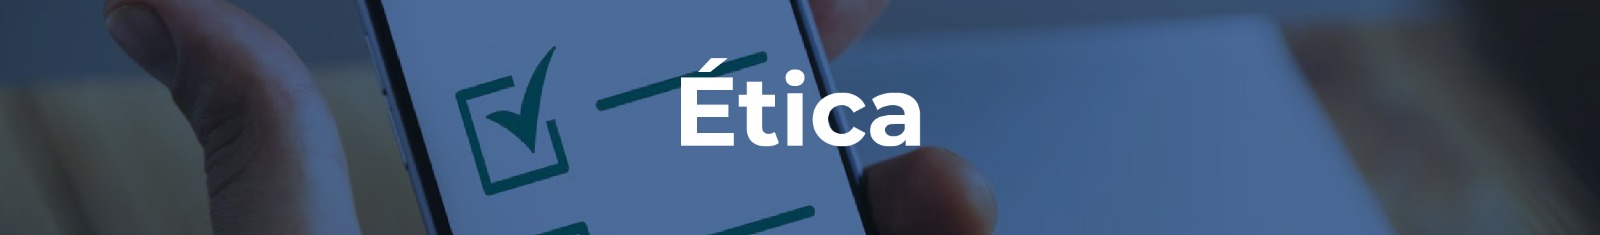 etica x1